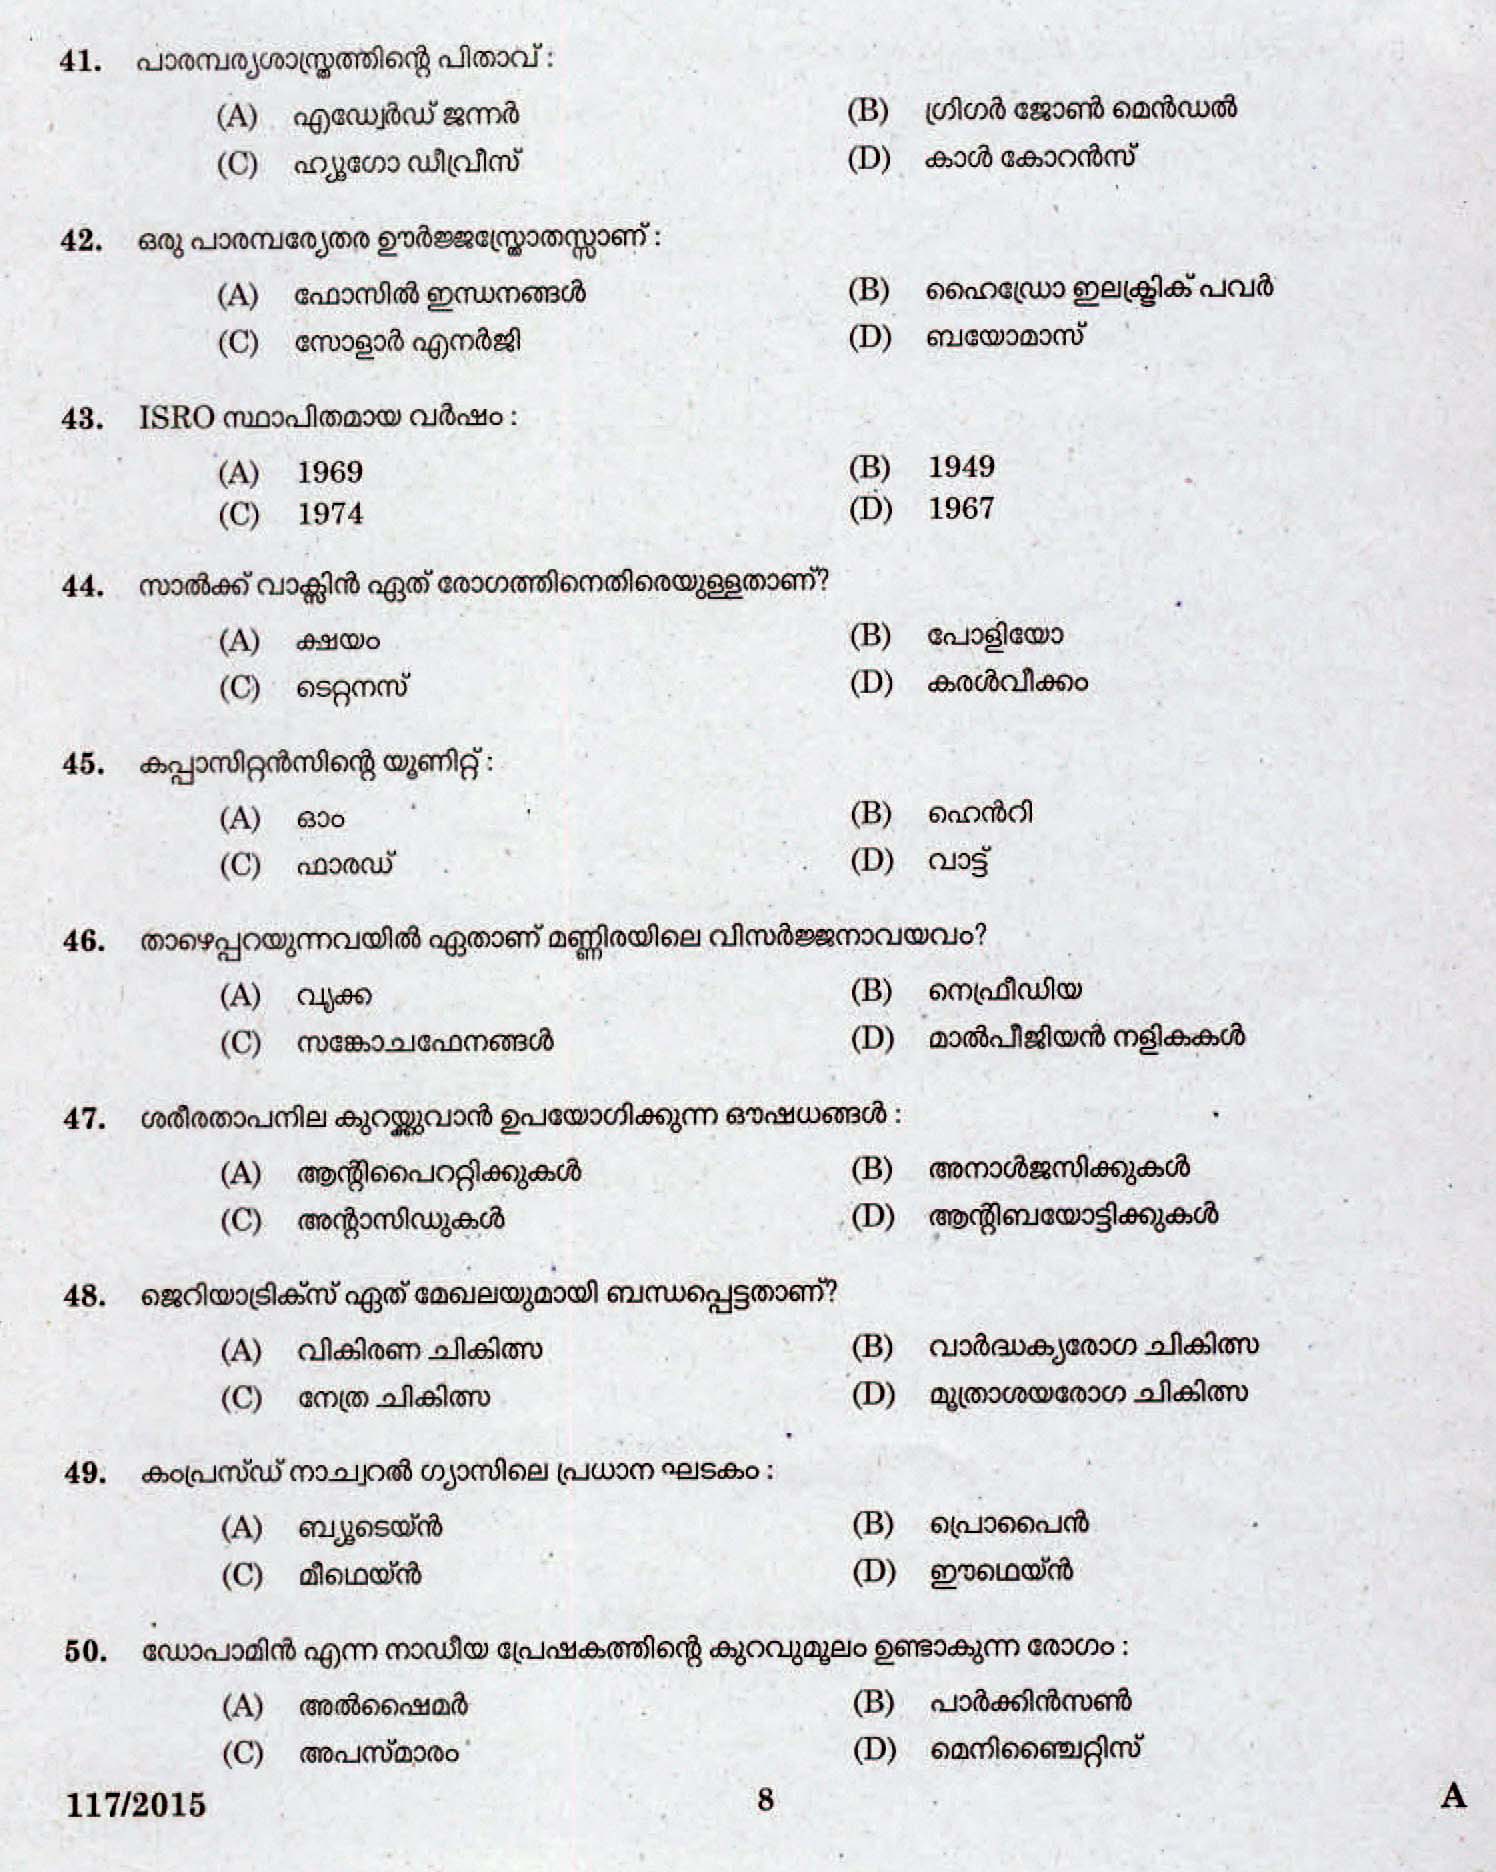 LD Clerk Various Kasaragod Question Paper Malayalam 2015 Paper Code 1172015 6